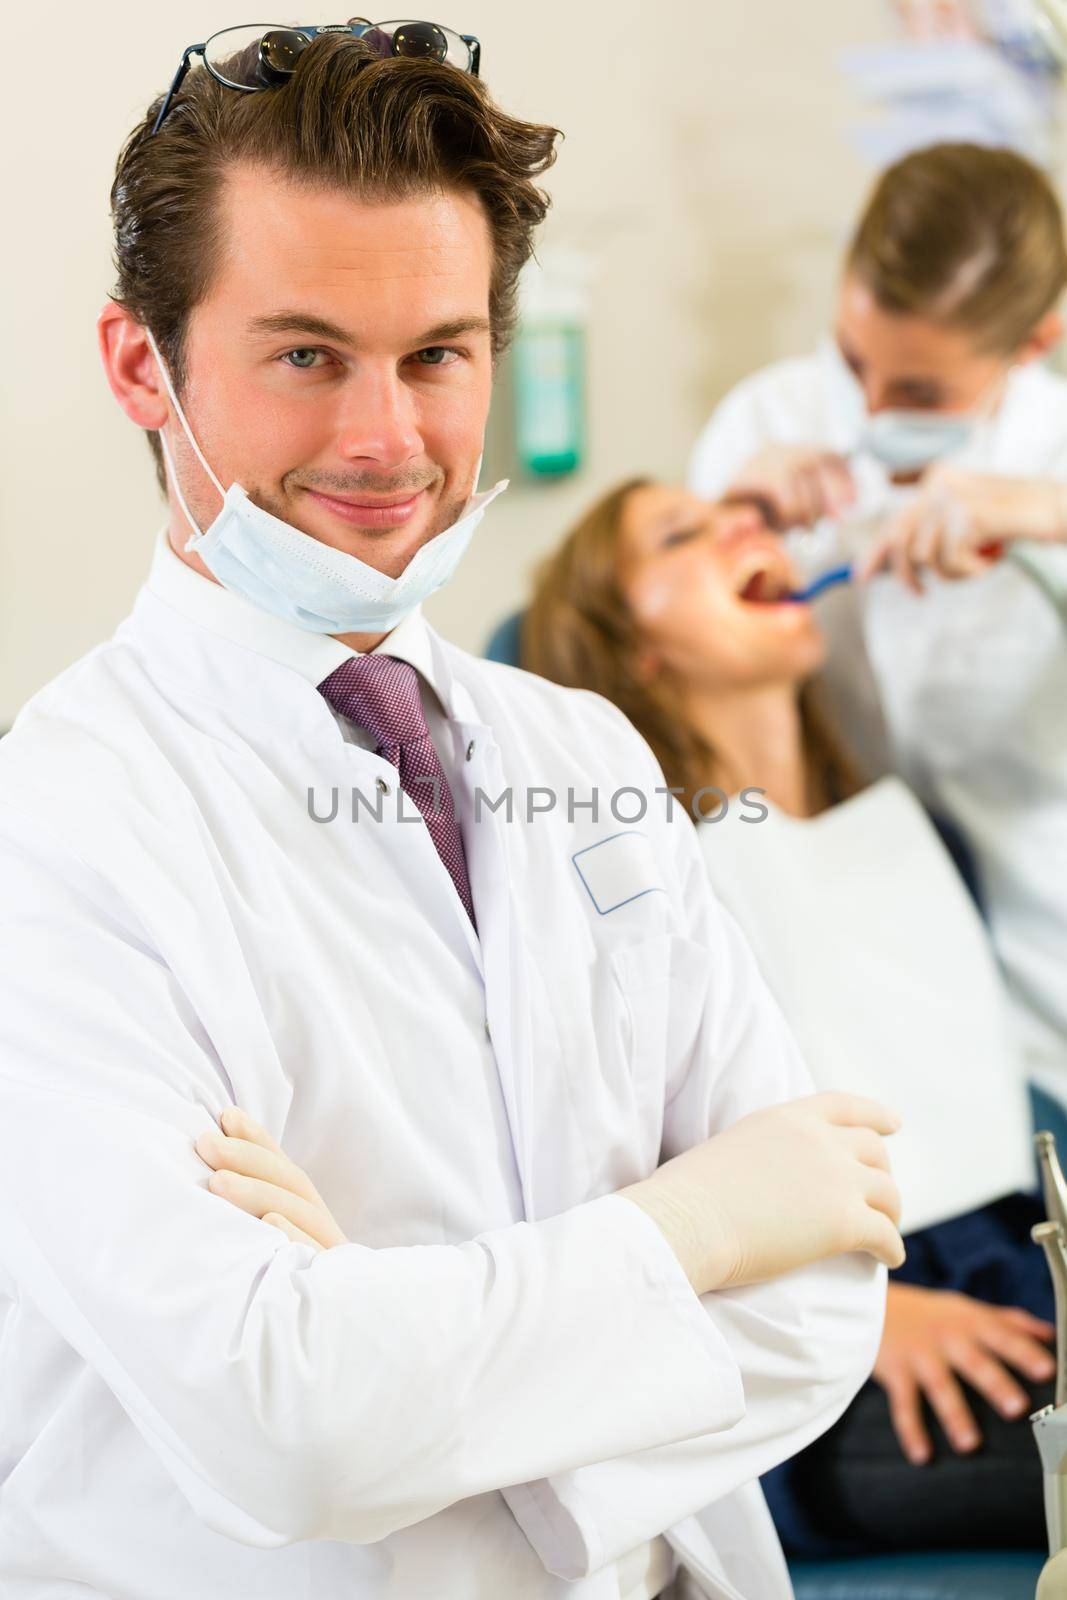 Dentist in his surgery by Kzenon